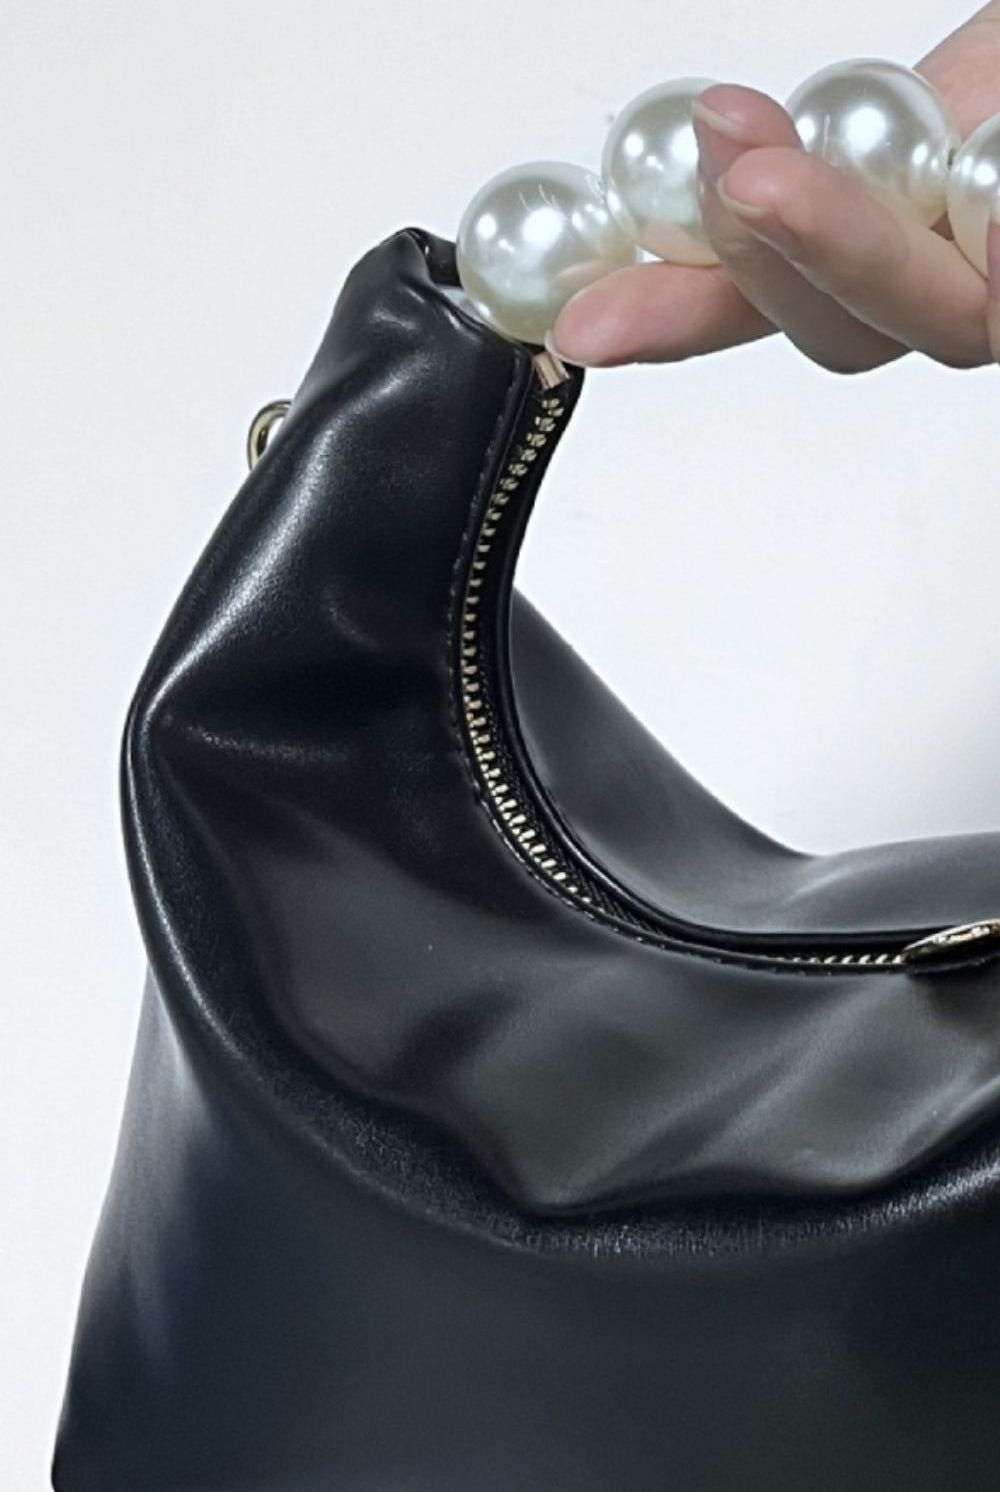 Lavender Adored PU Leather Pearl Handbag Handbags